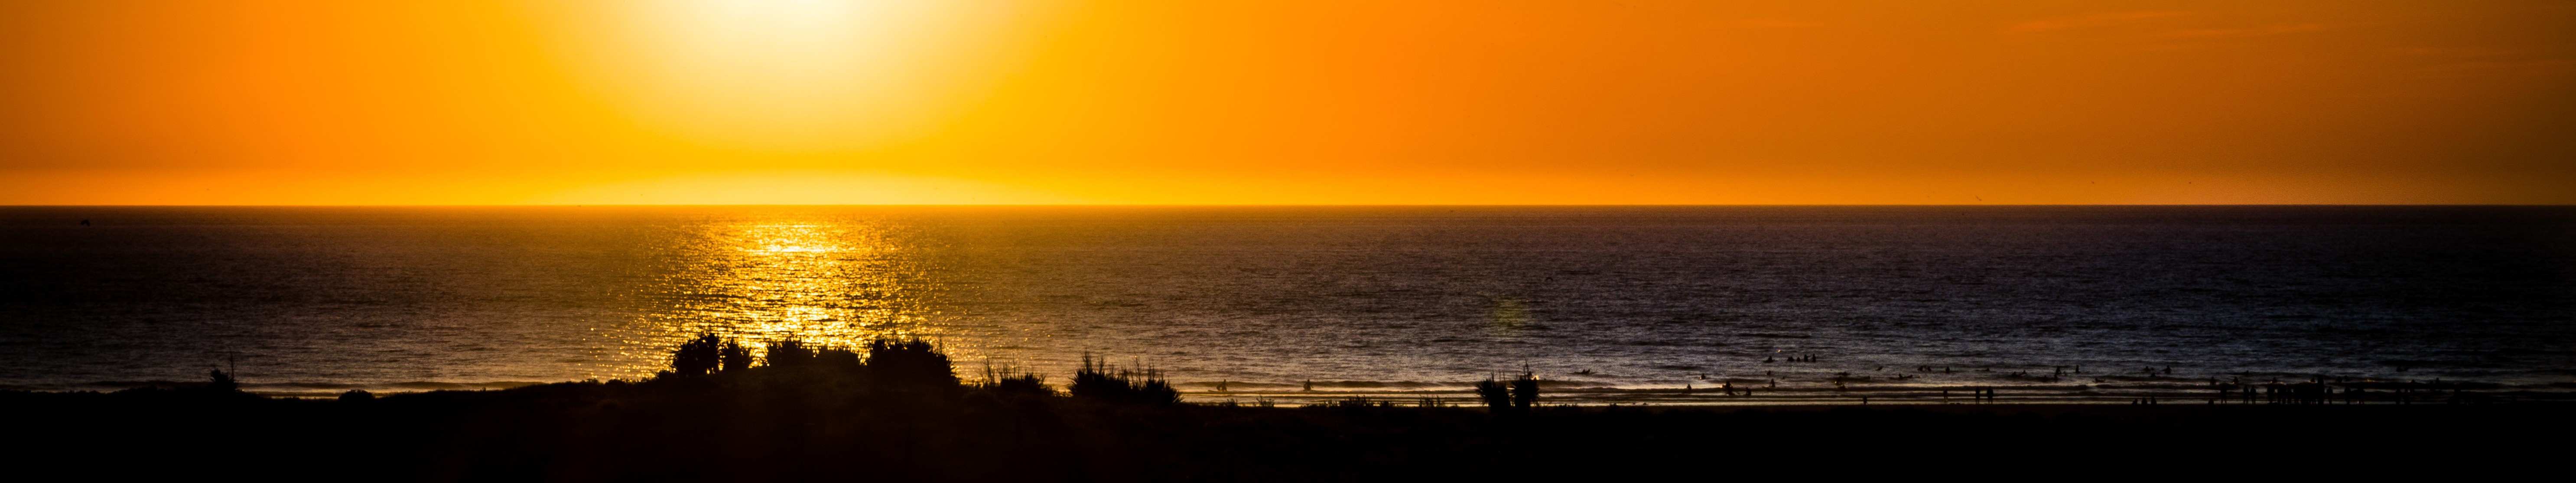 General 5944x1114 triple screen sunset orange sky sky nature sea horizon sunlight outdoors